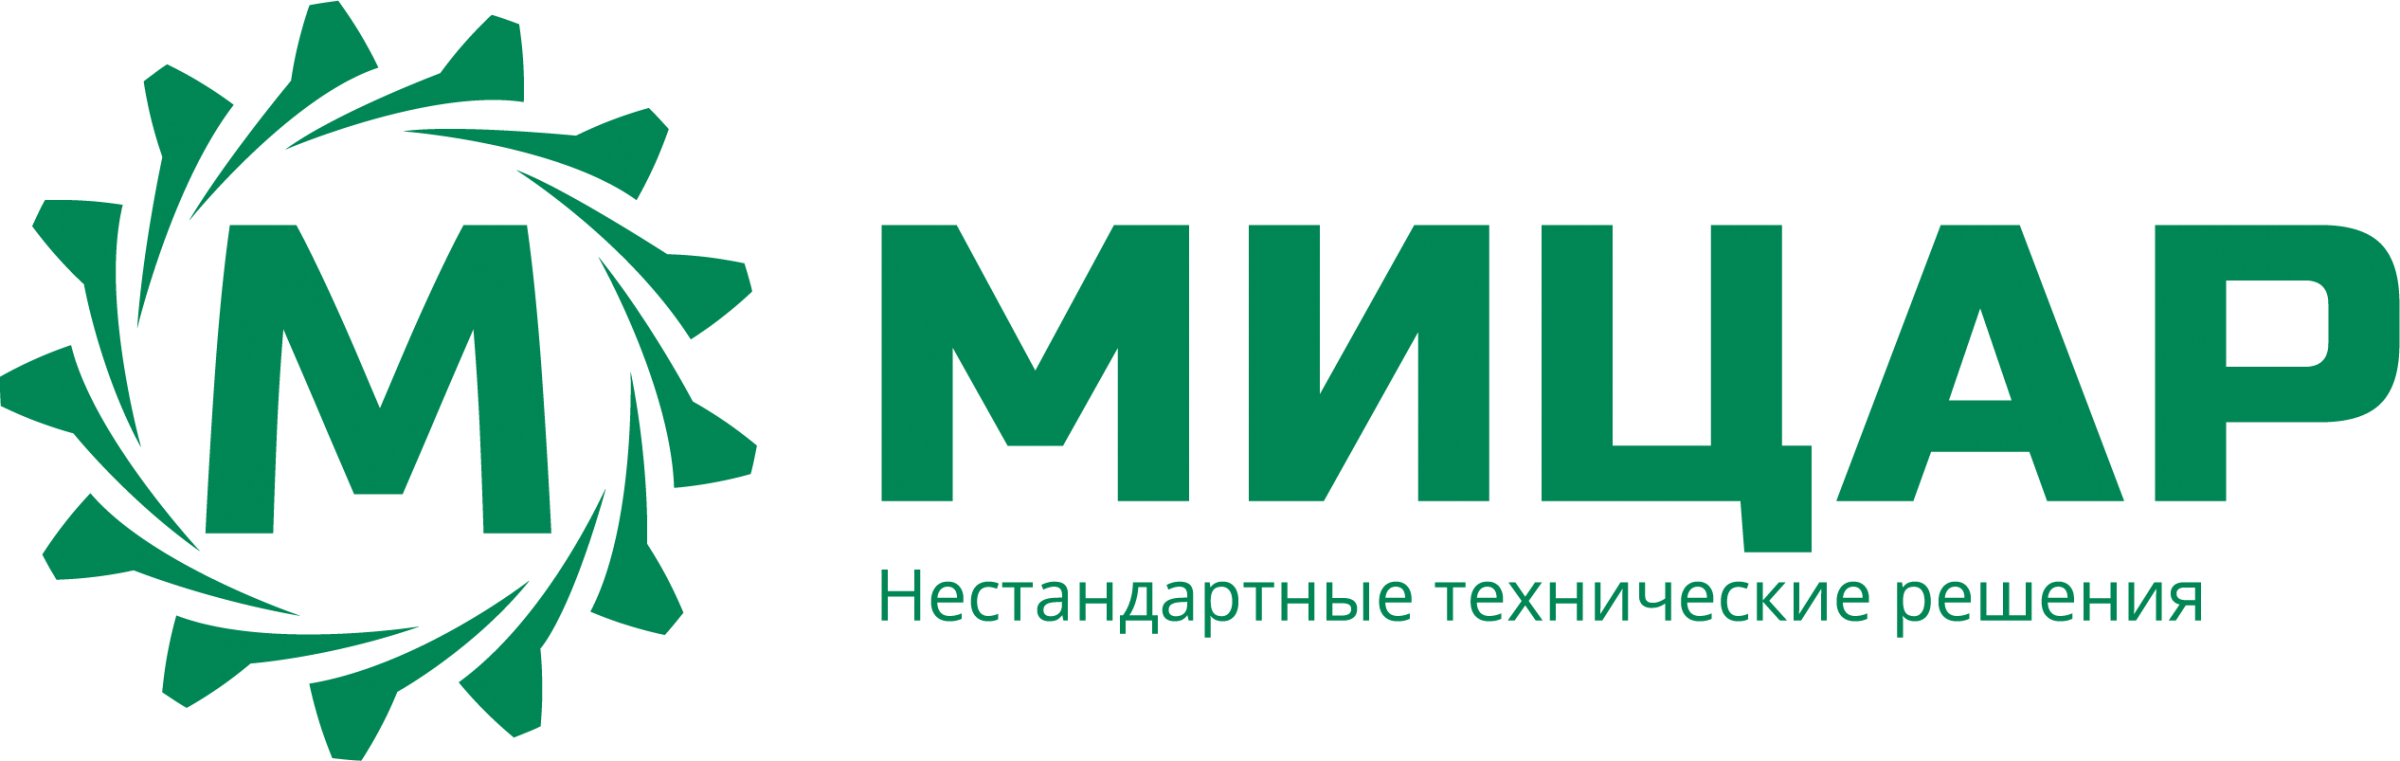 МИЦАР - Город Москва Mitzar_logo_RU_slogan_green_horizontal_RGB.png